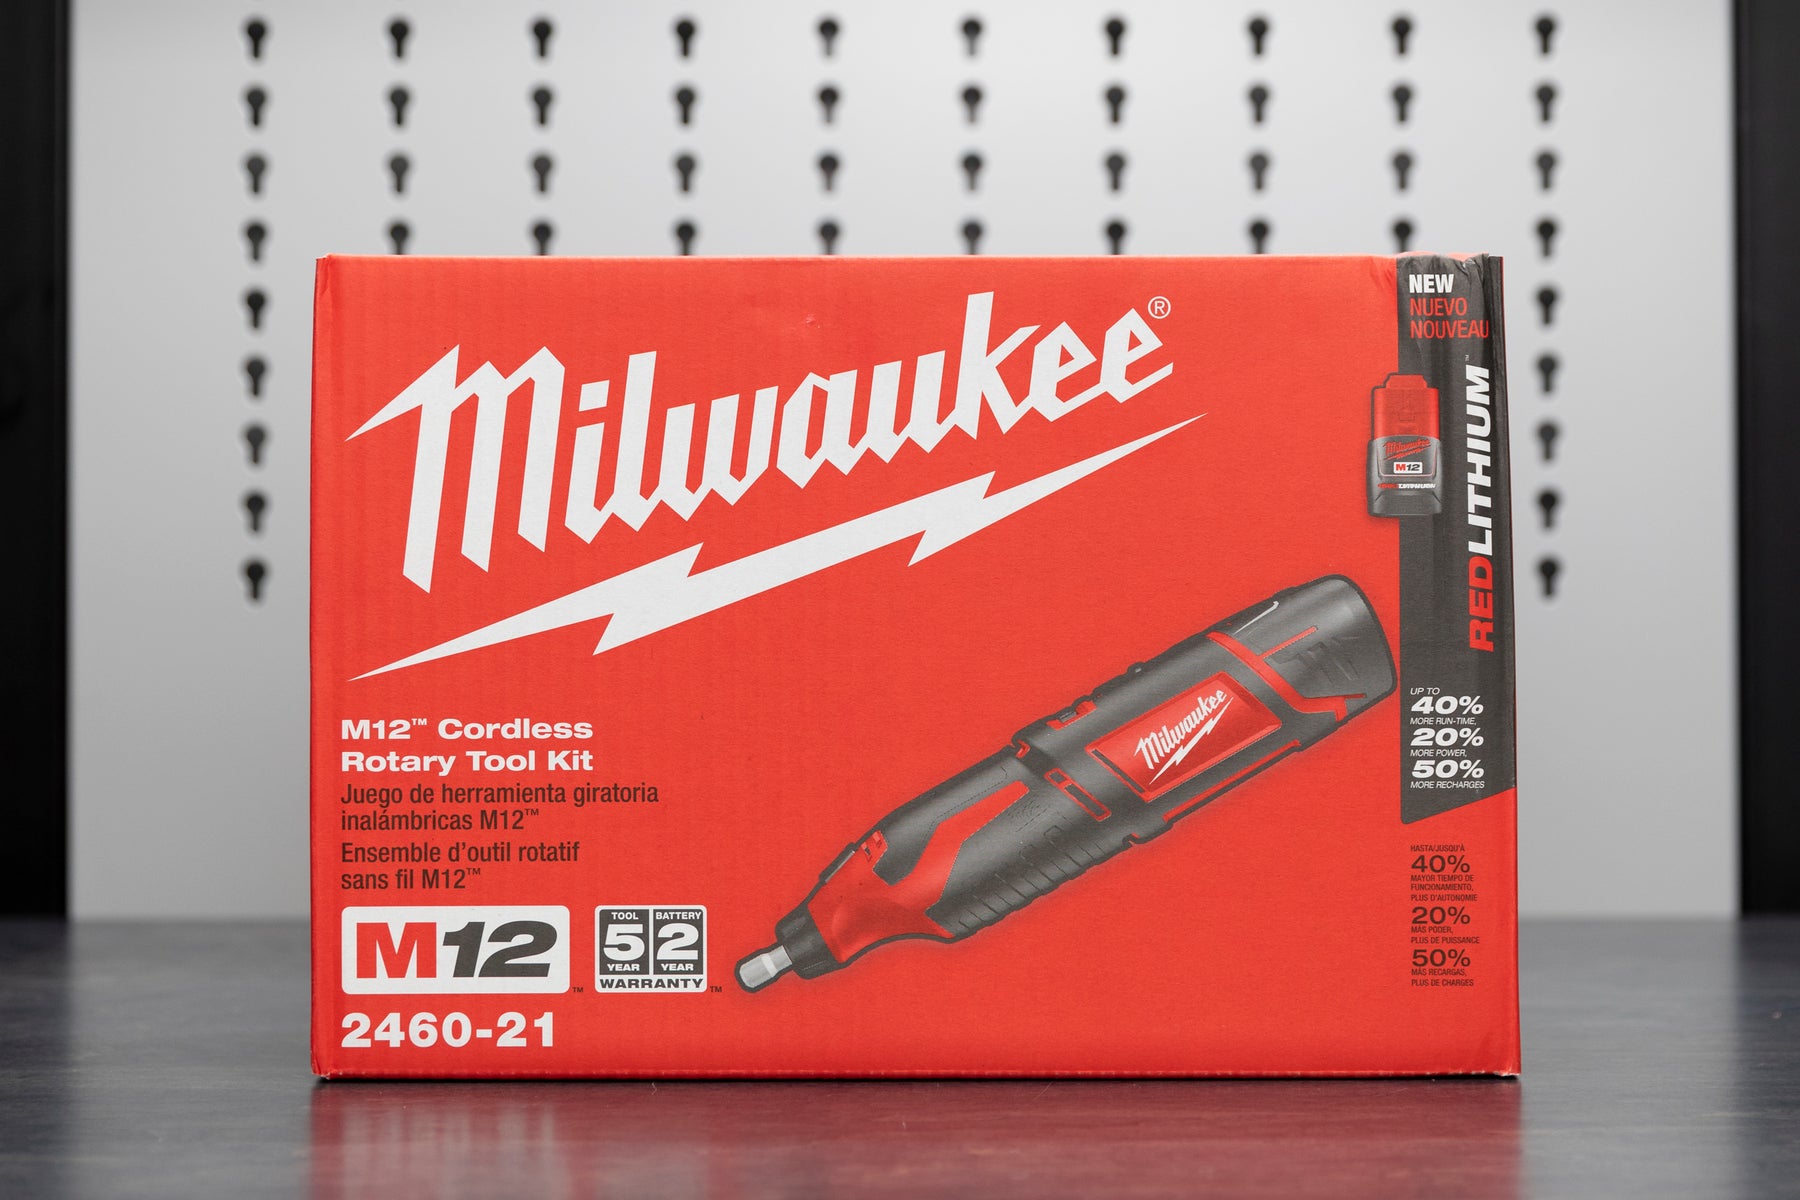 Milwaukee 2460-20 M12 ROTARY TOOL ONLY - Power Rotary Tools 